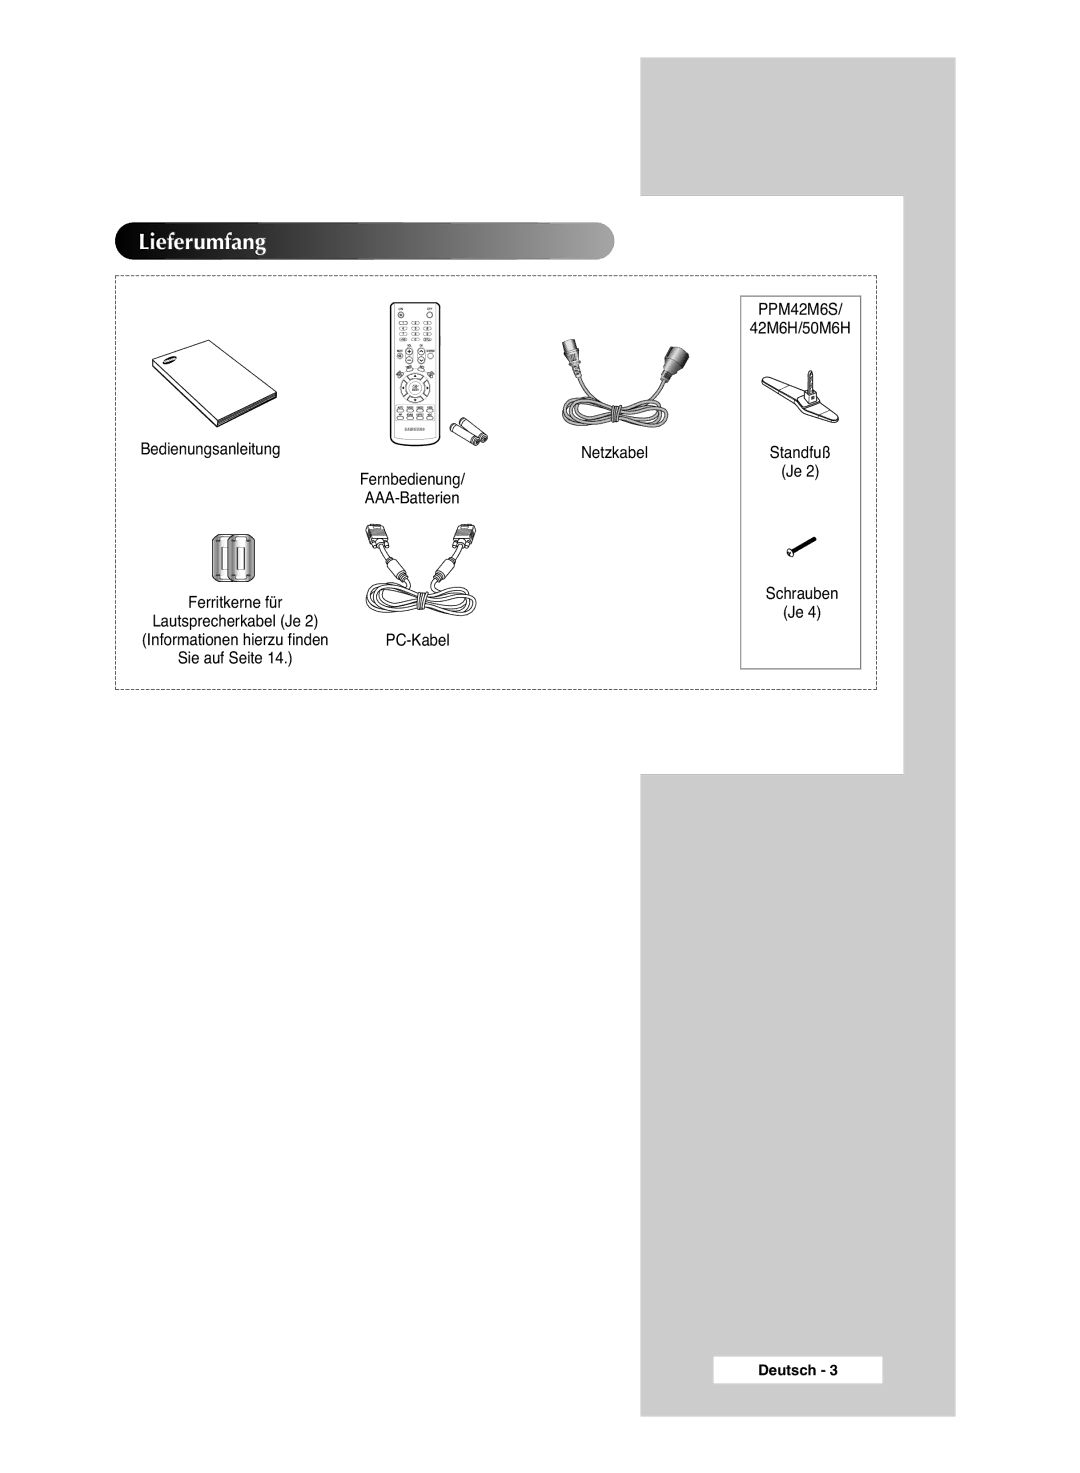 Samsung PPM42M6SSX/EDC manual Lieferumfang, Bedienungsanleitung Netzkabel, PC-Kabel 